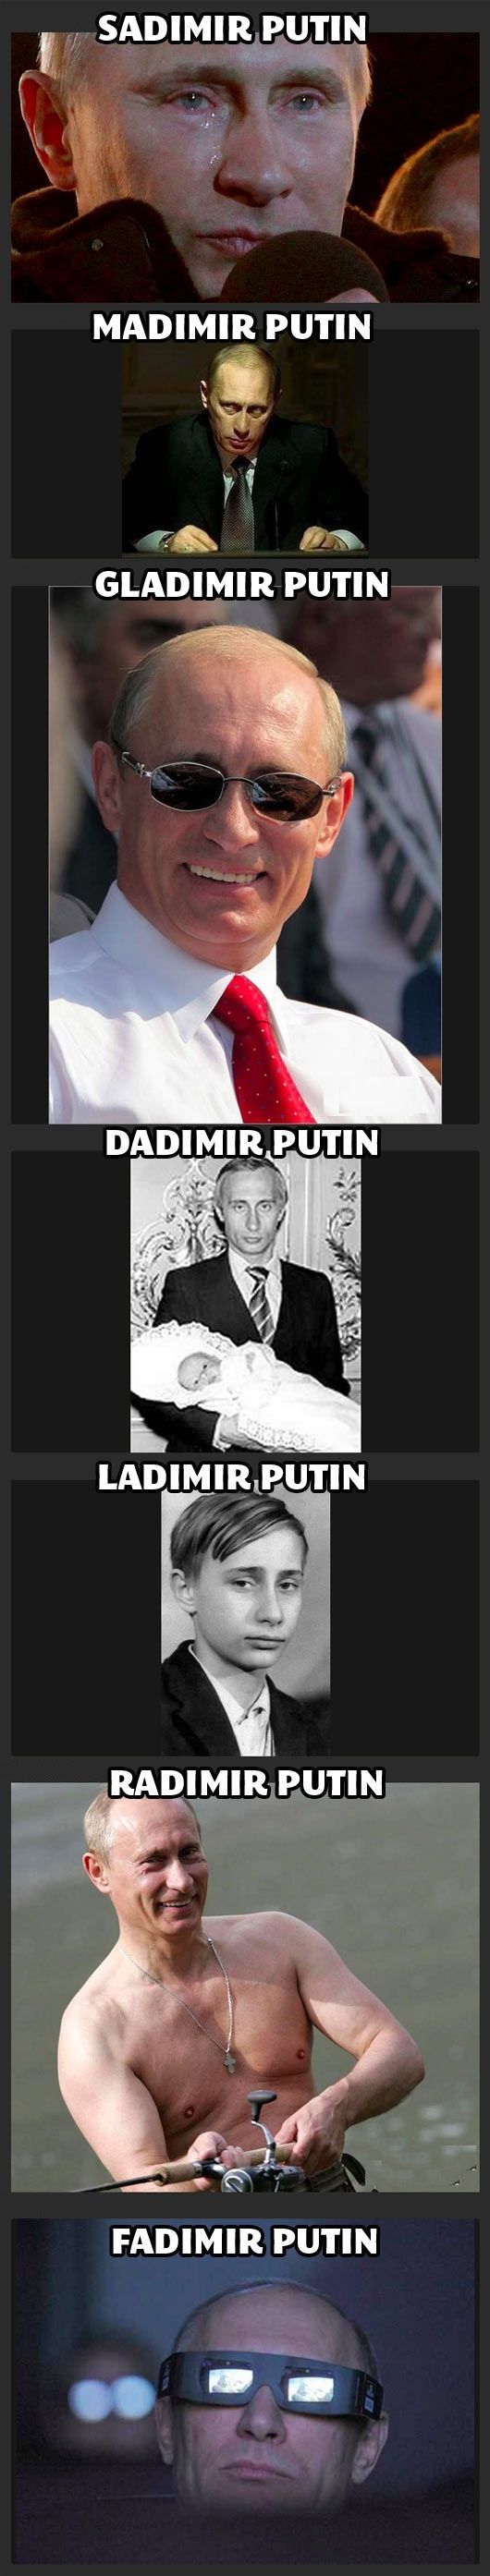 The many faces of Vladimir Putin.